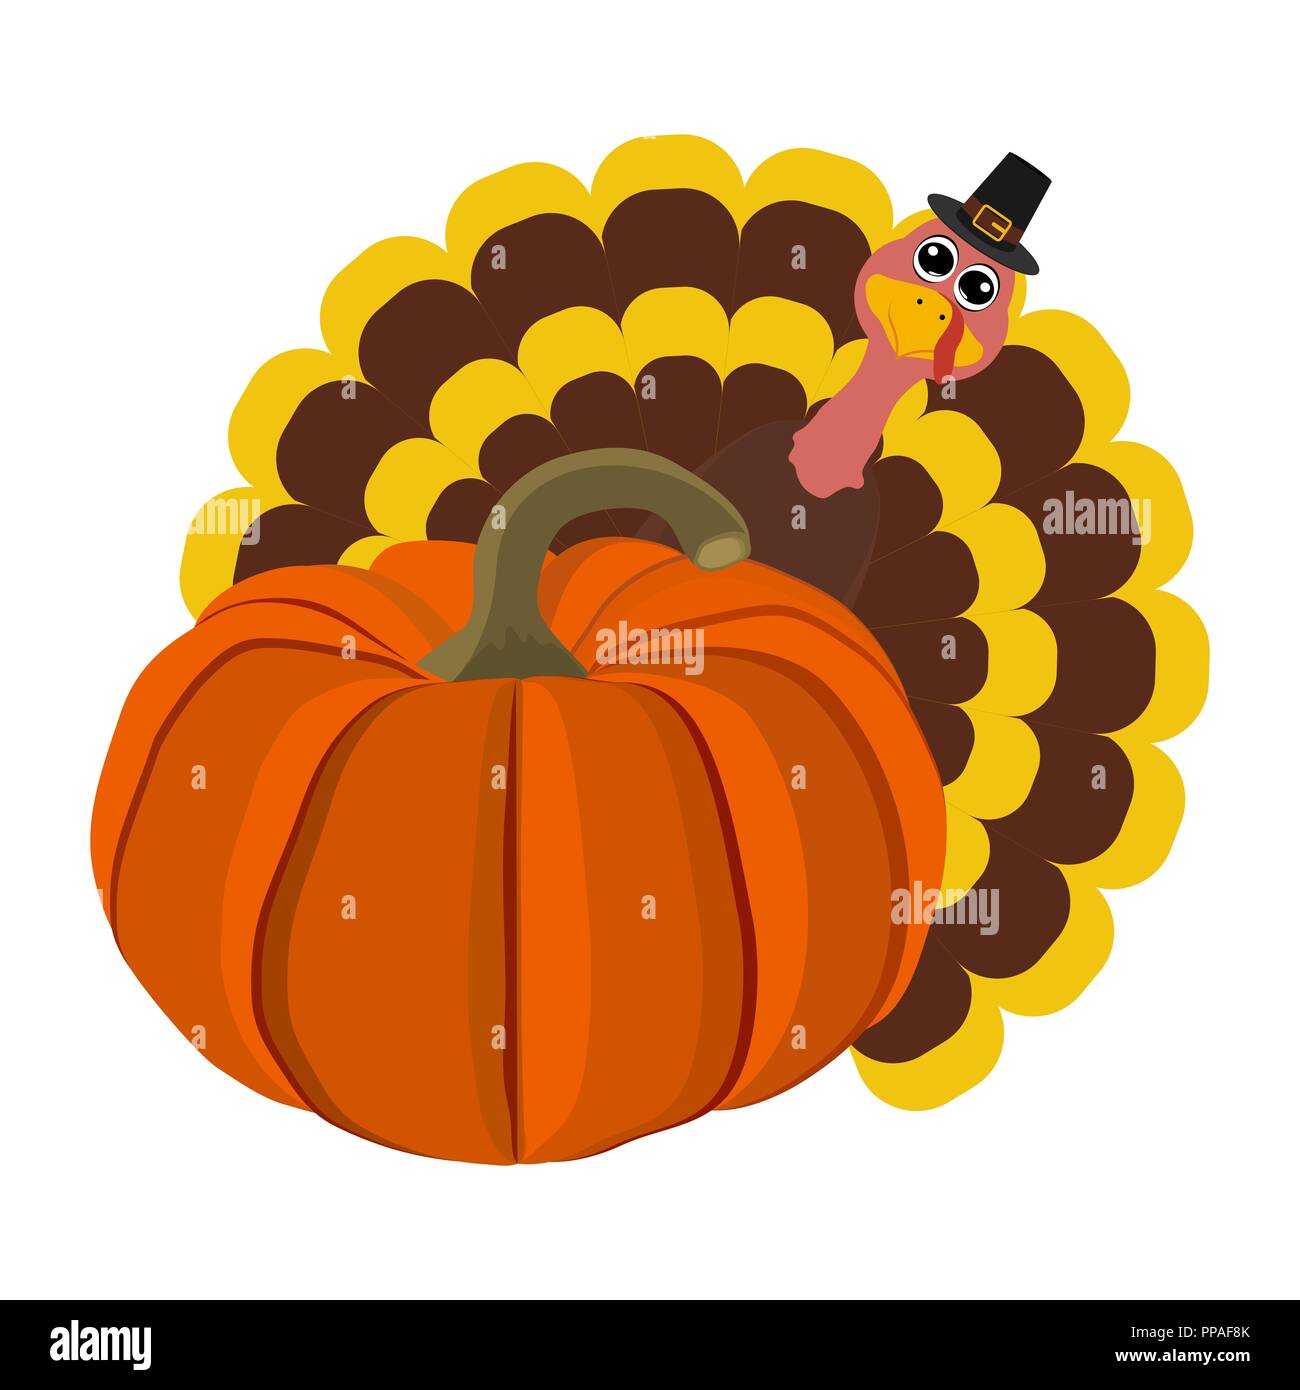 Turkey Pilgrimin on Thanksgiving Day vector illustration Stock Vector